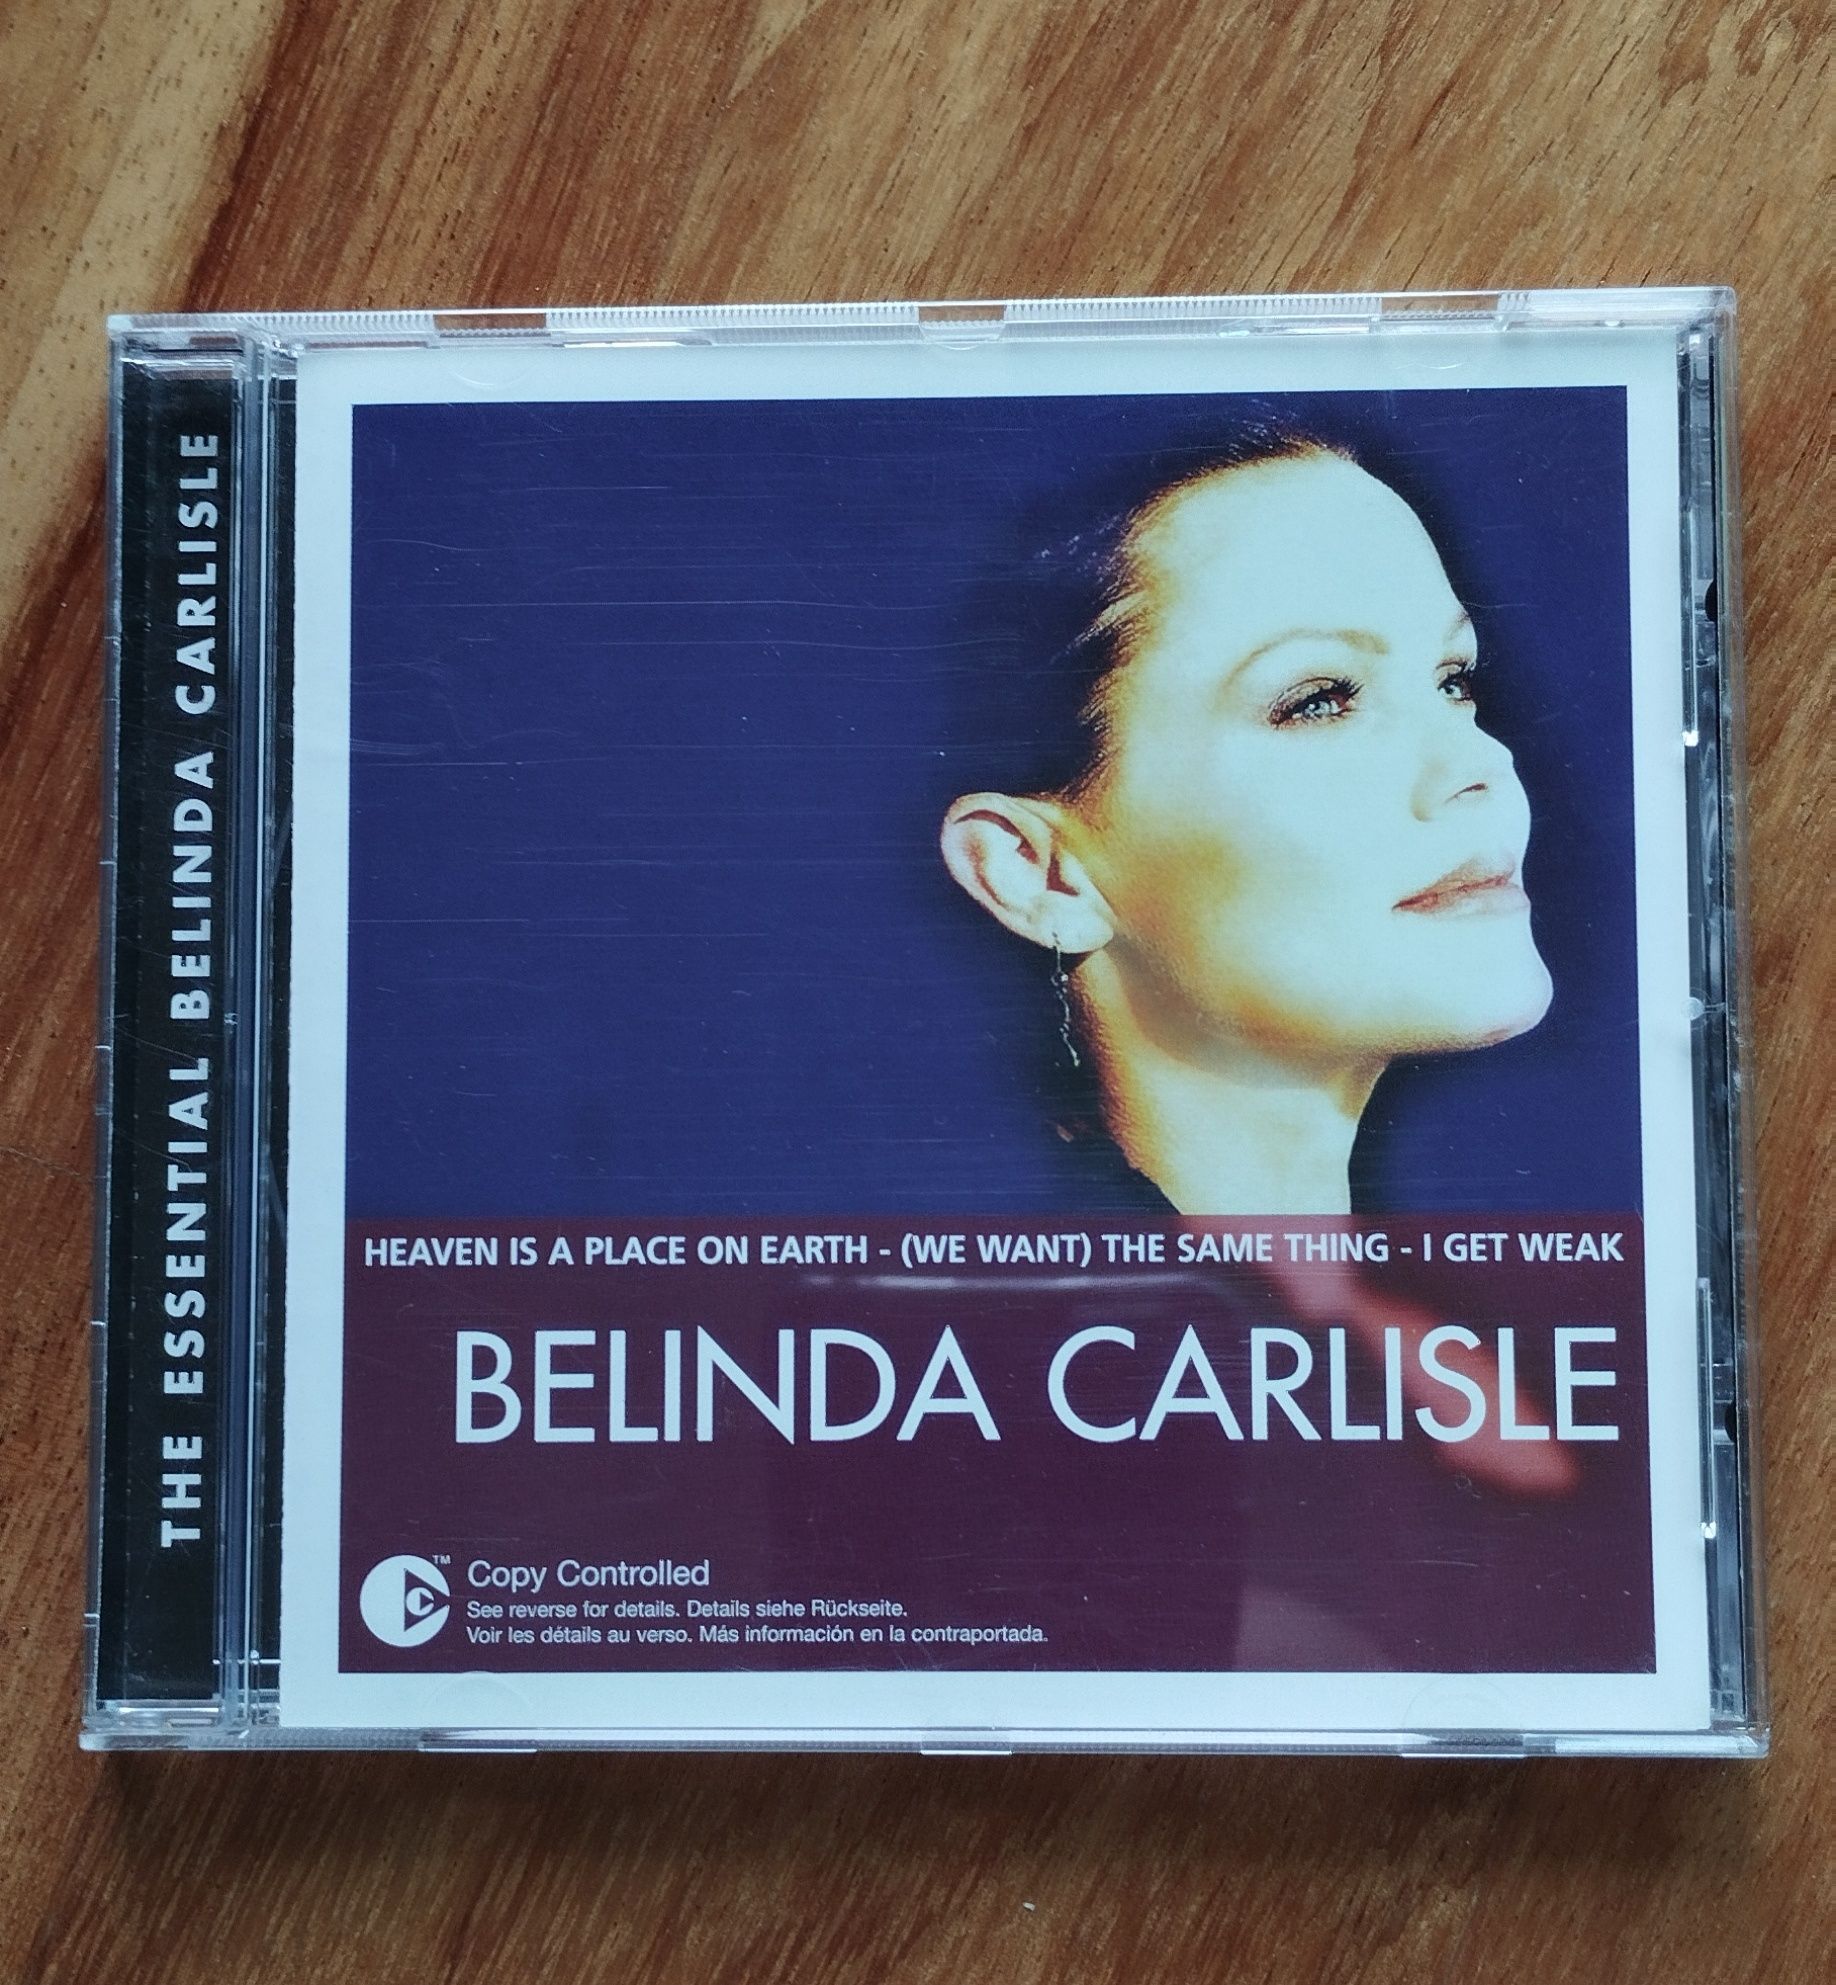 CD Álbum original - BELINDA CARLISLE - The Essential